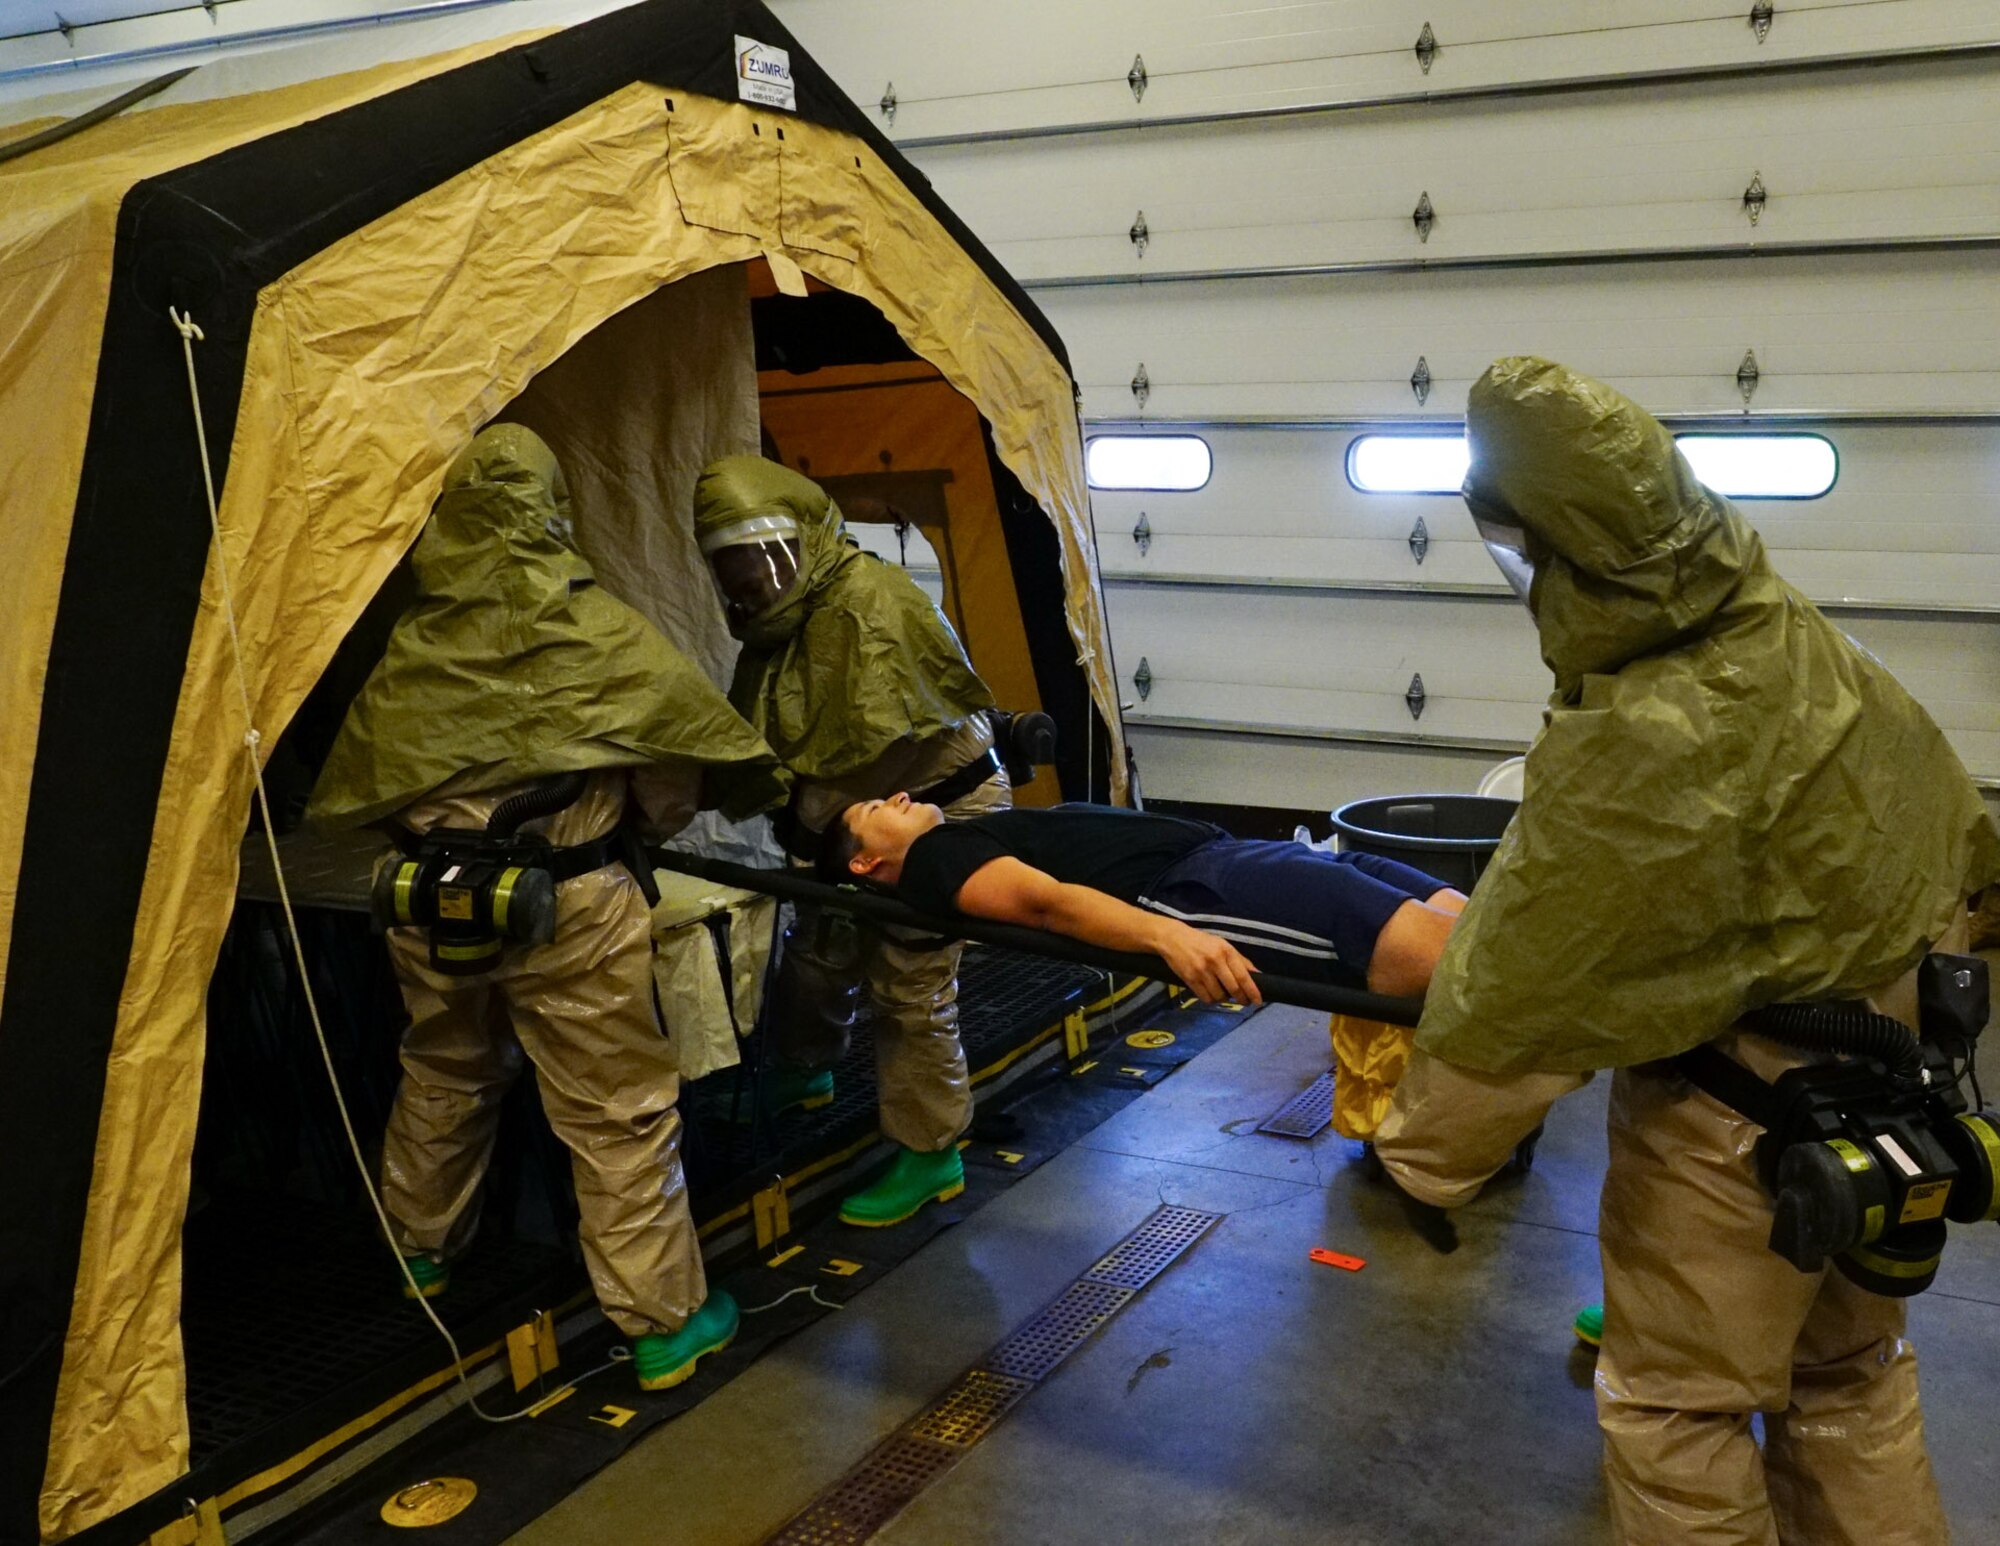 Airmen carry a volunteer patient into a tent.